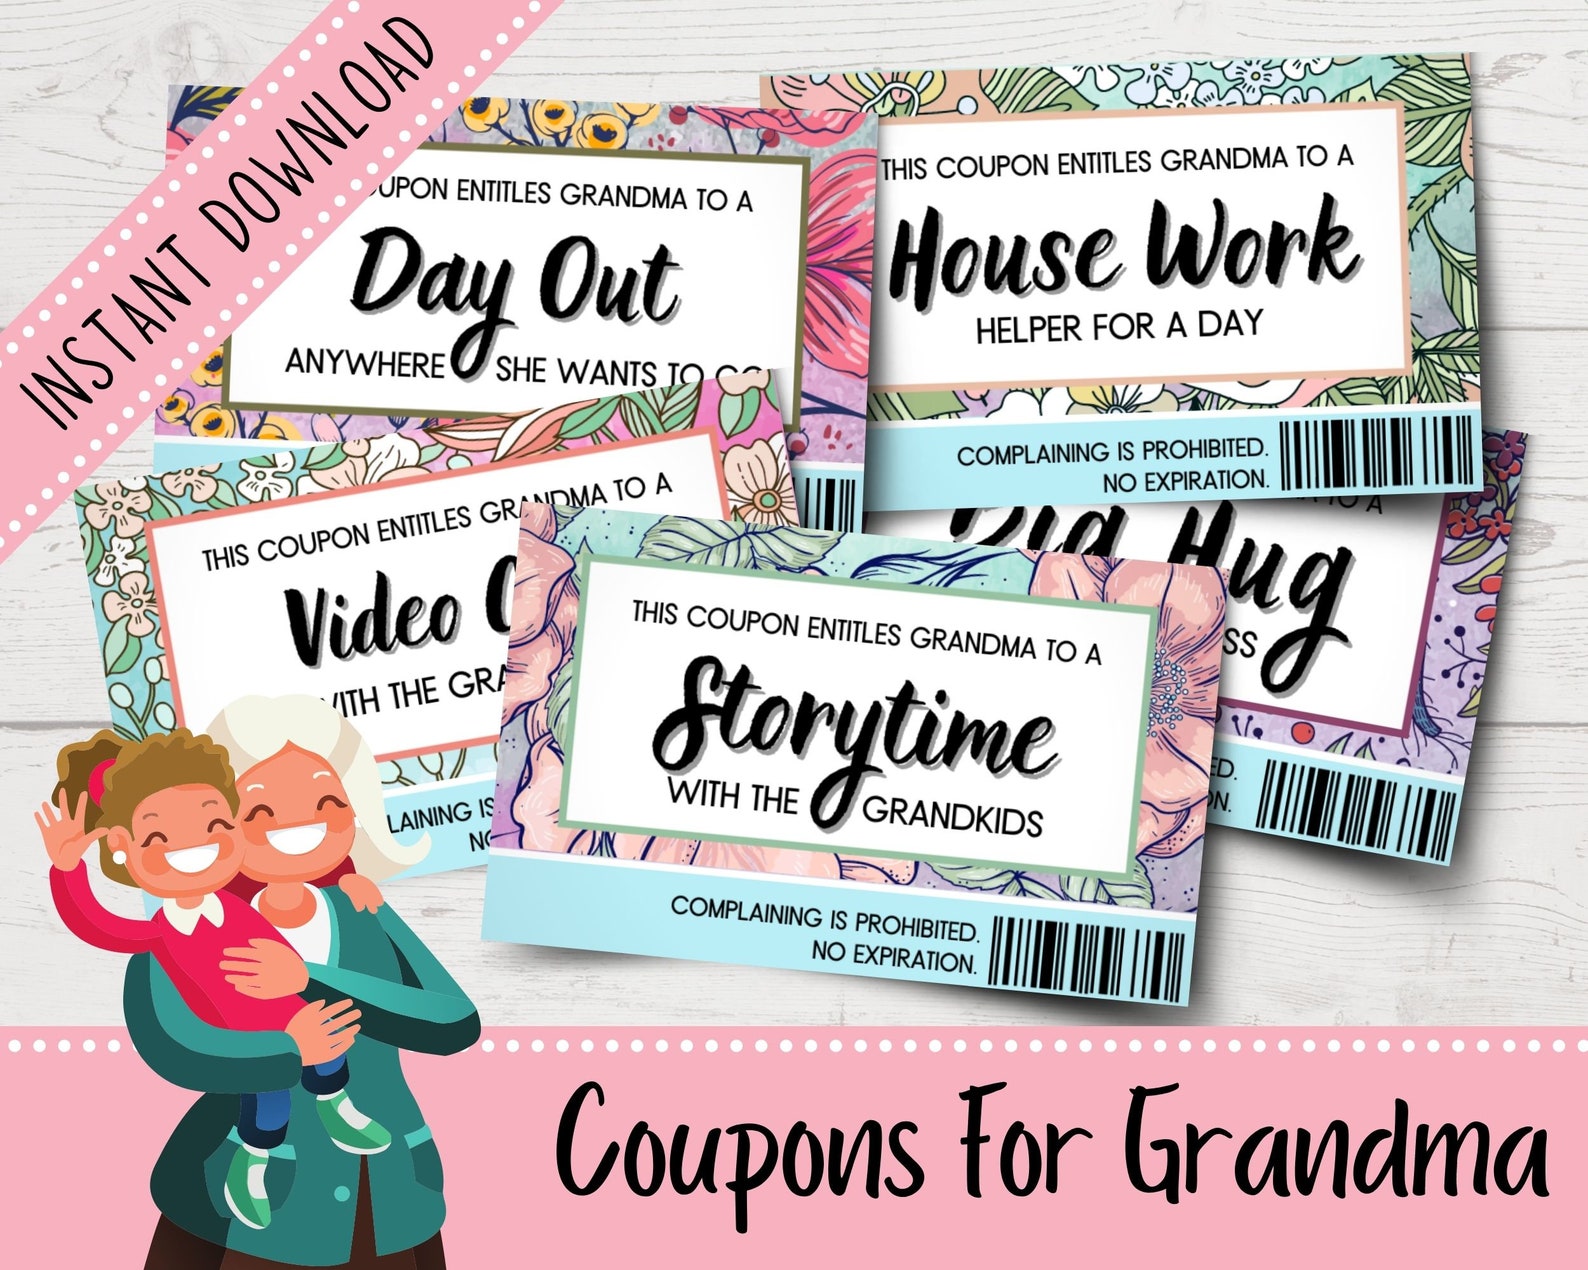 grandma-coupons-coupon-book-gifts-for-grandma-etsy